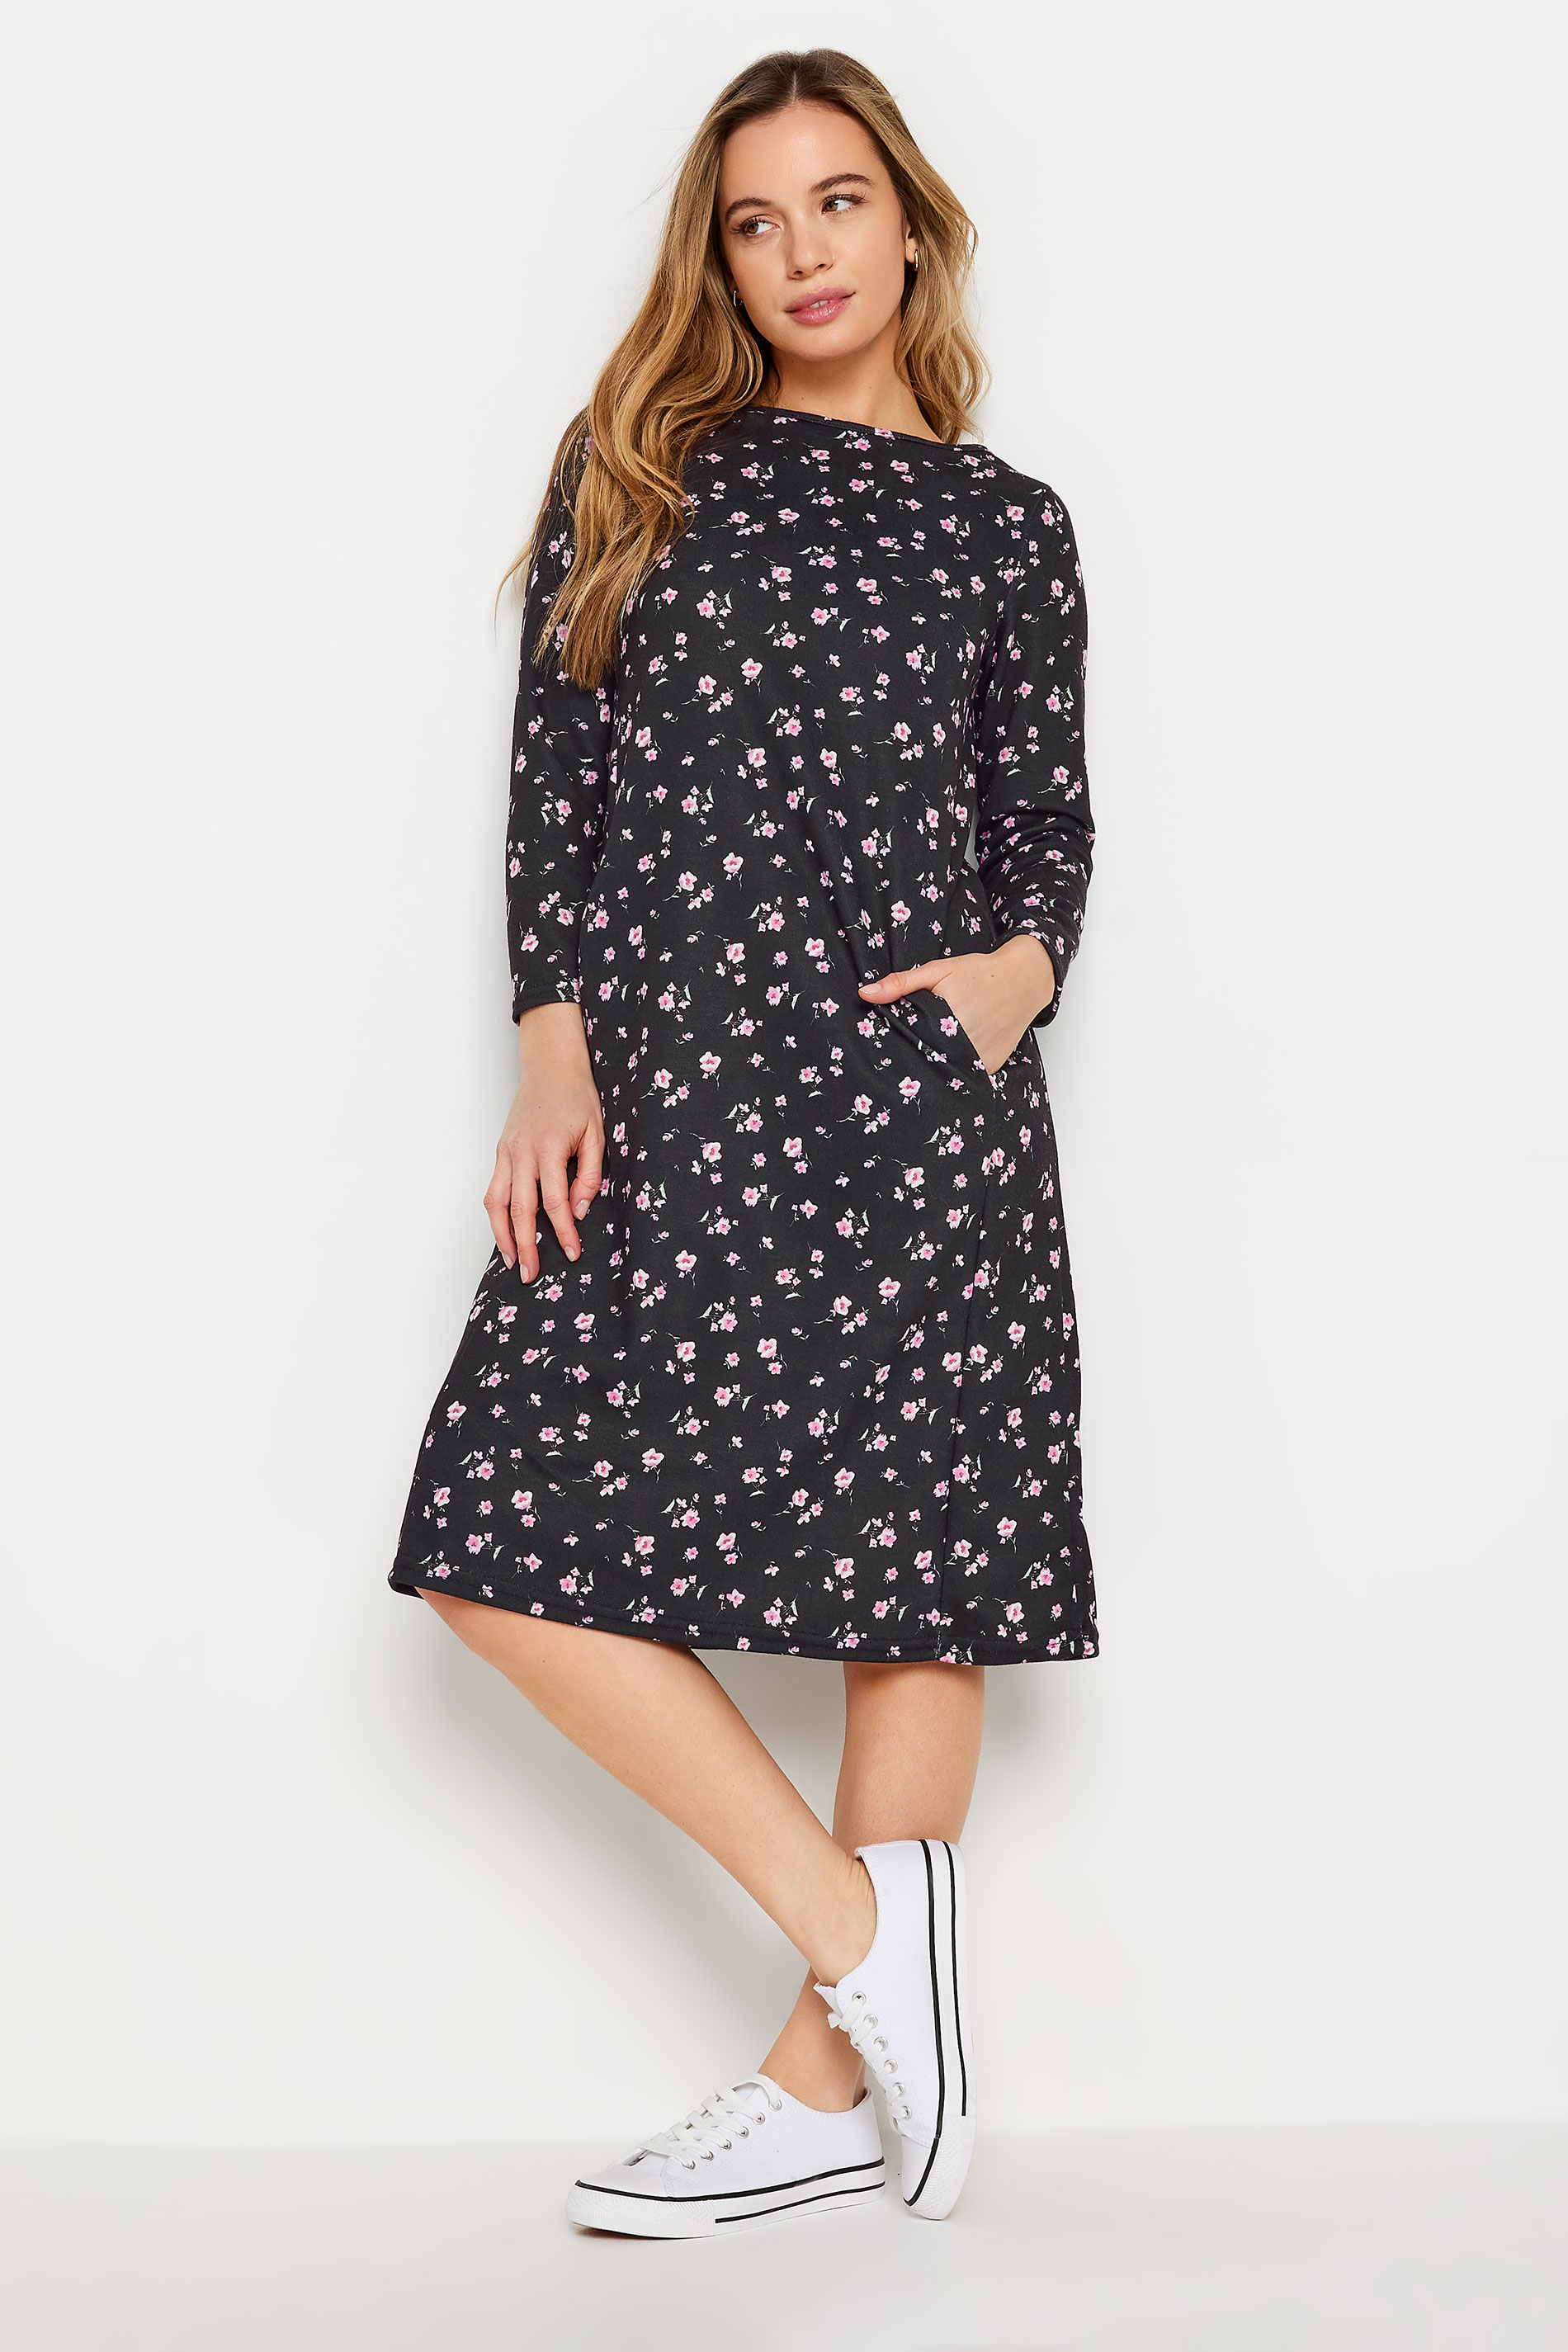 M&Co Petite Black Floral Print Ponte Swing Dress | M&Co 2